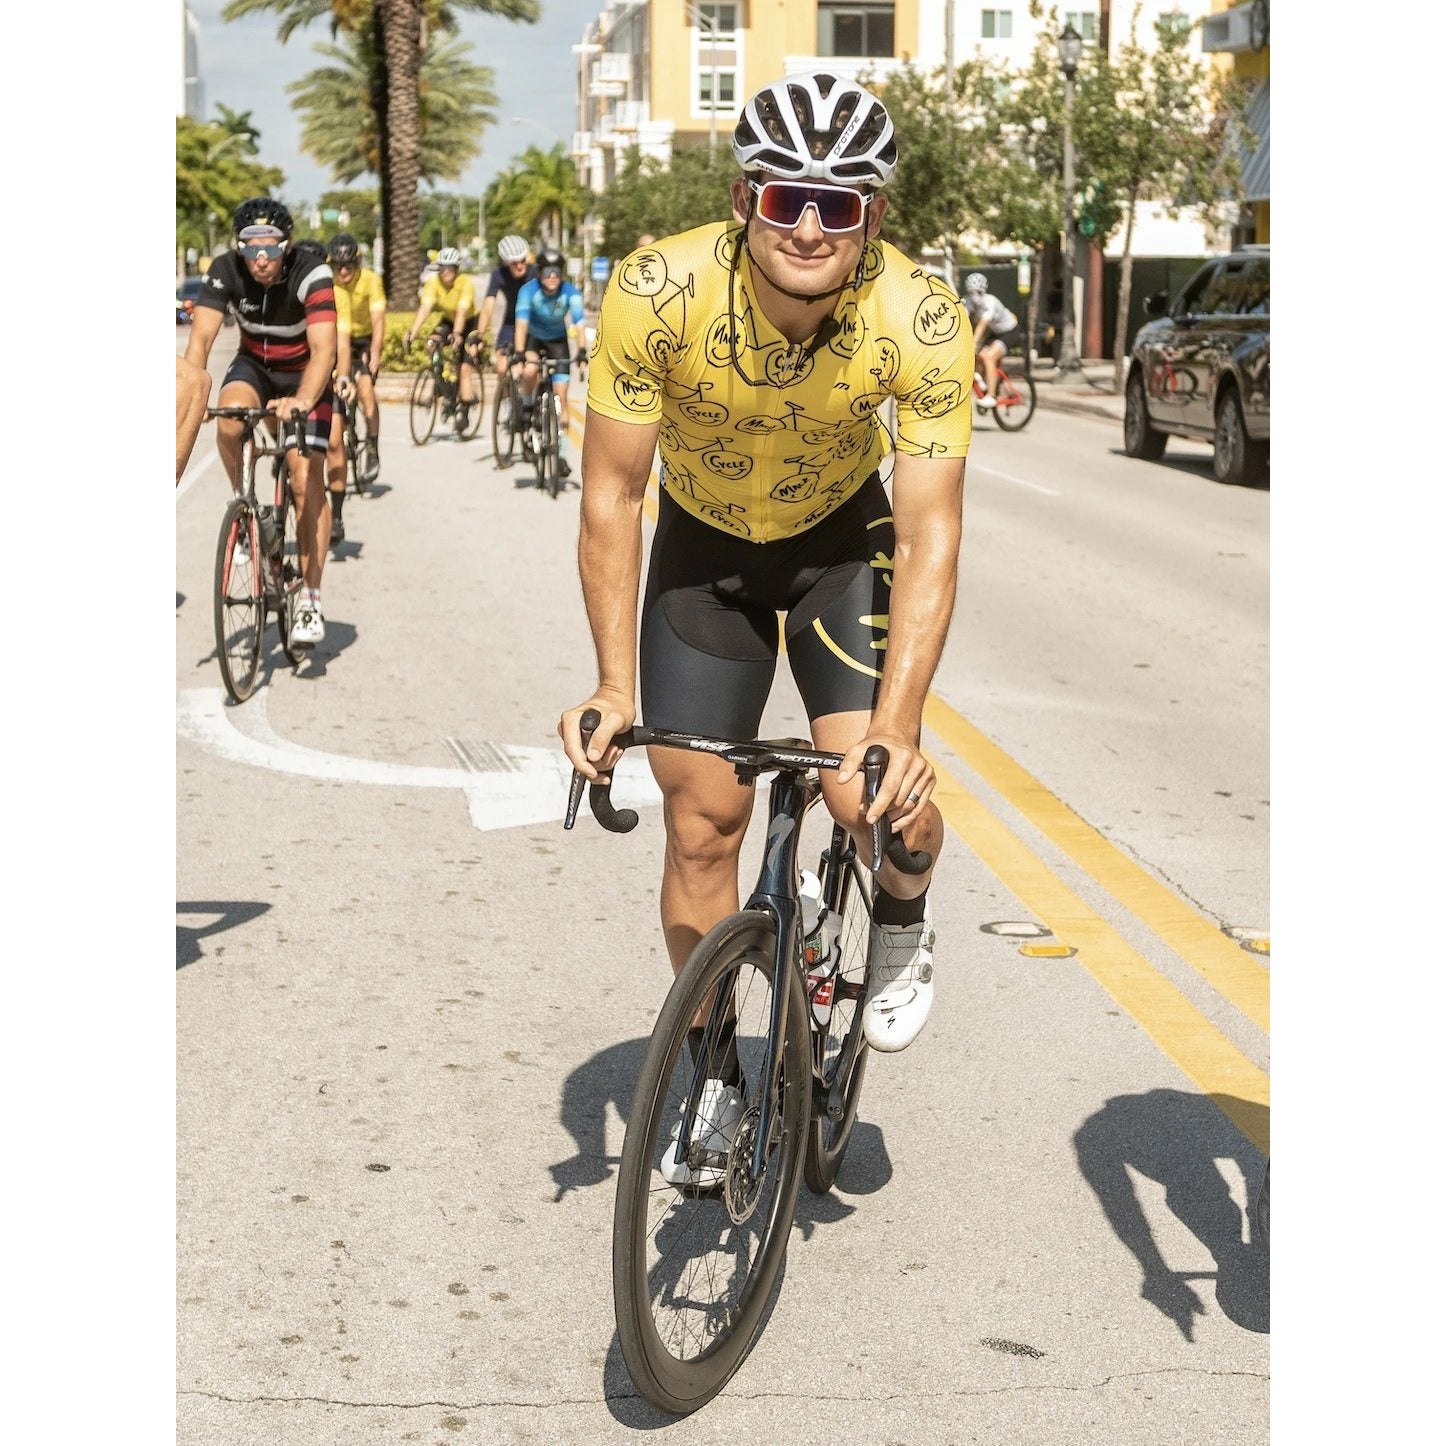 Ride - Men's Cycling Jersey or Bibs